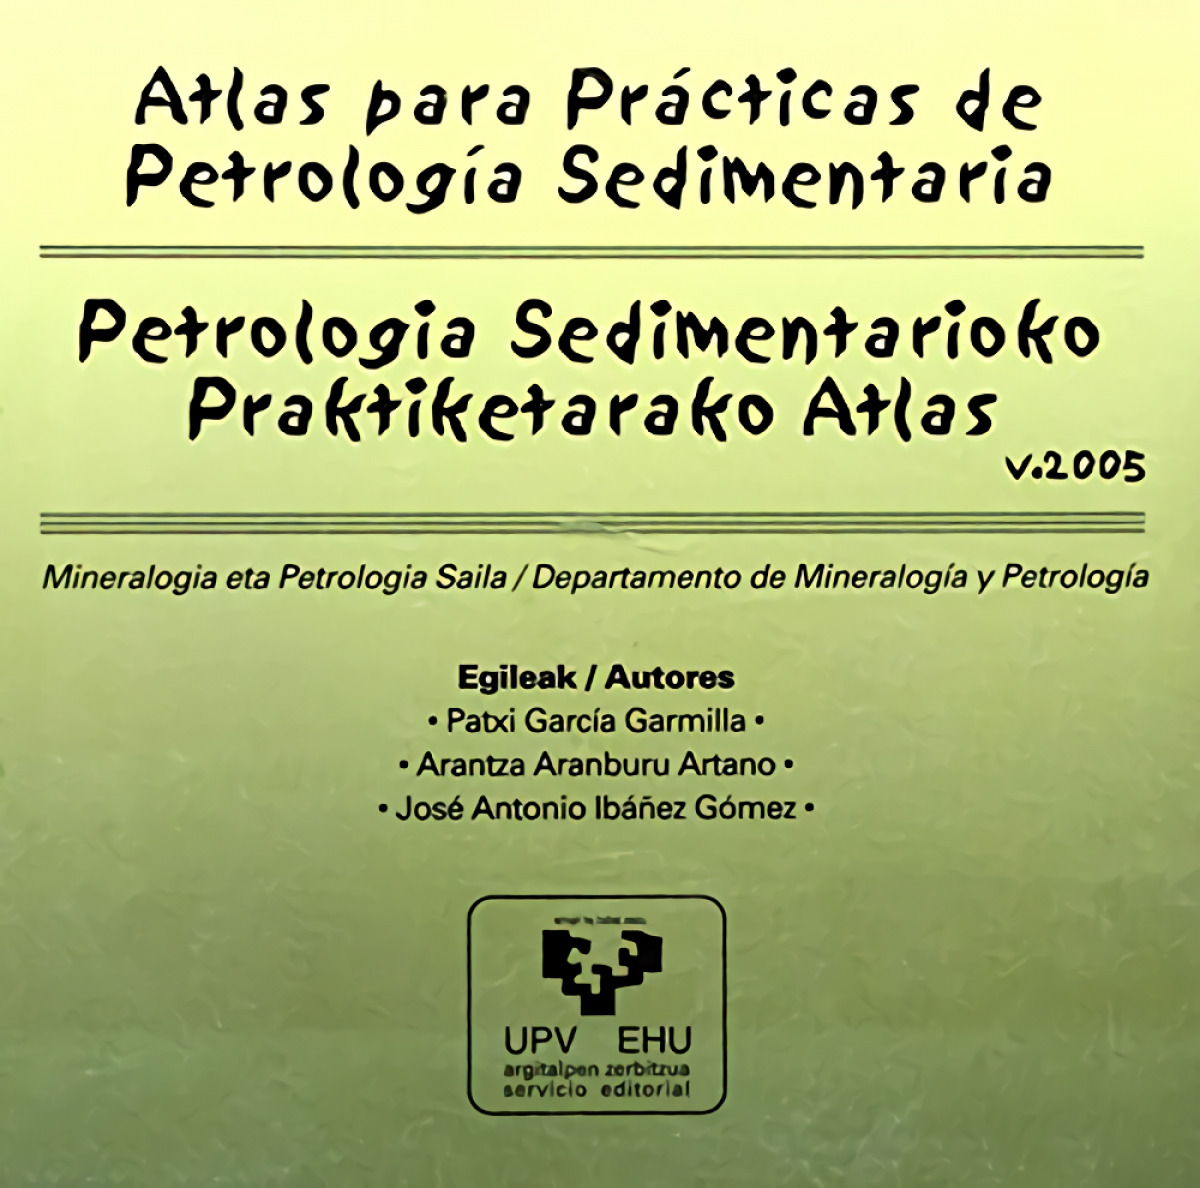 Atlas para prácticas de petrología sedimentaria - Petrologia sedimentarioko prak - García Garmilla, Patxi / Aranburu Artano, Arantza / Ibáñez Gómez, José Antonio